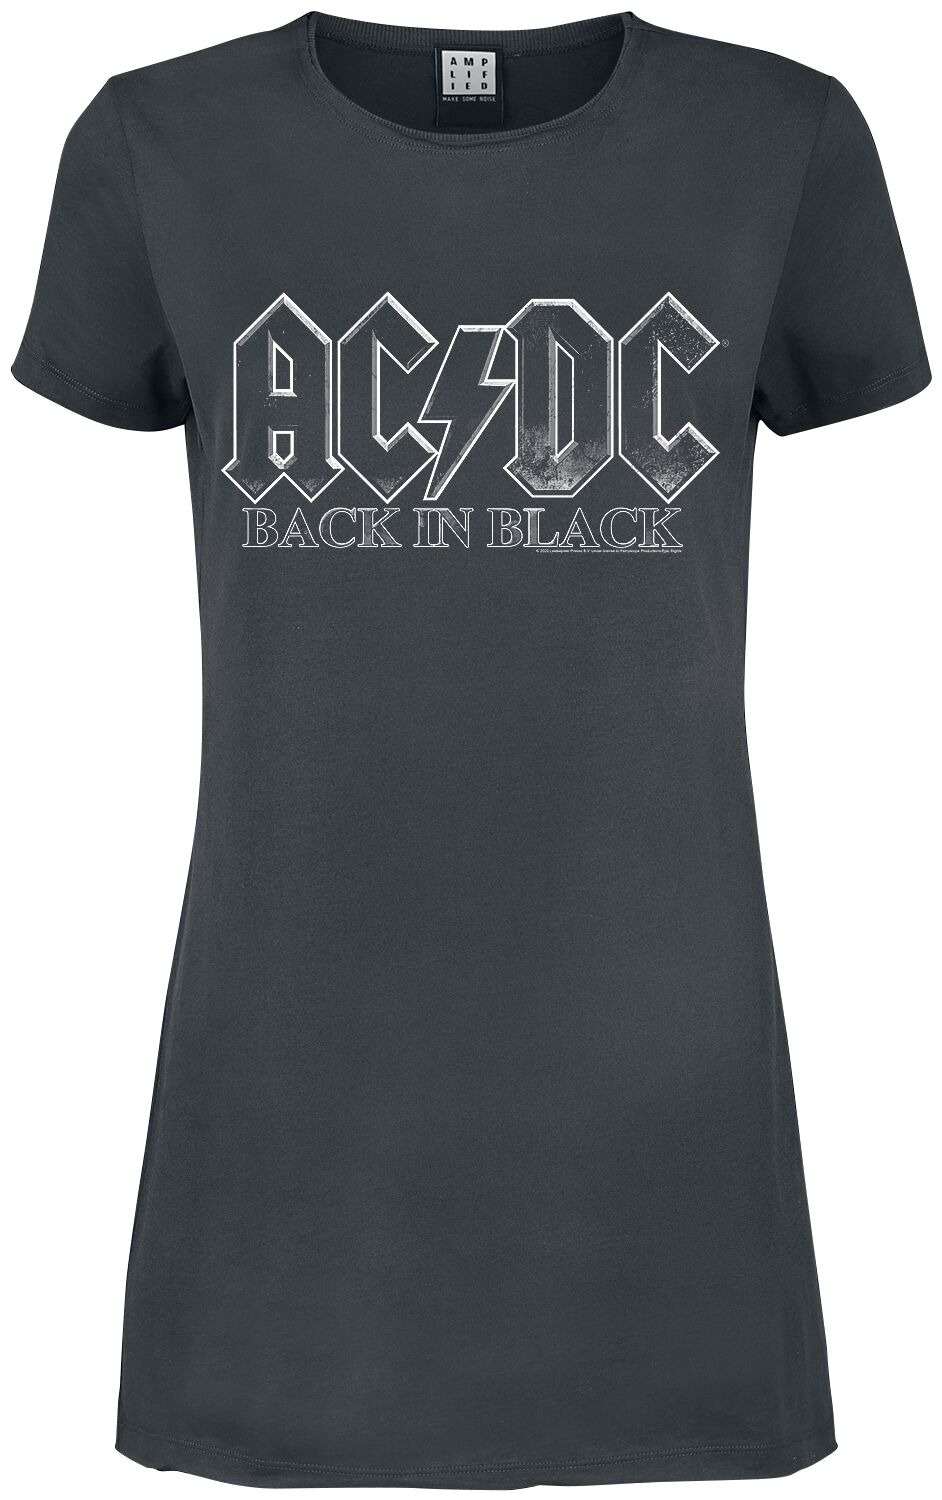 Robe courte de AC/DC - Amplified Collection - Back In Black - XS à XL - pour Femme - anthracite